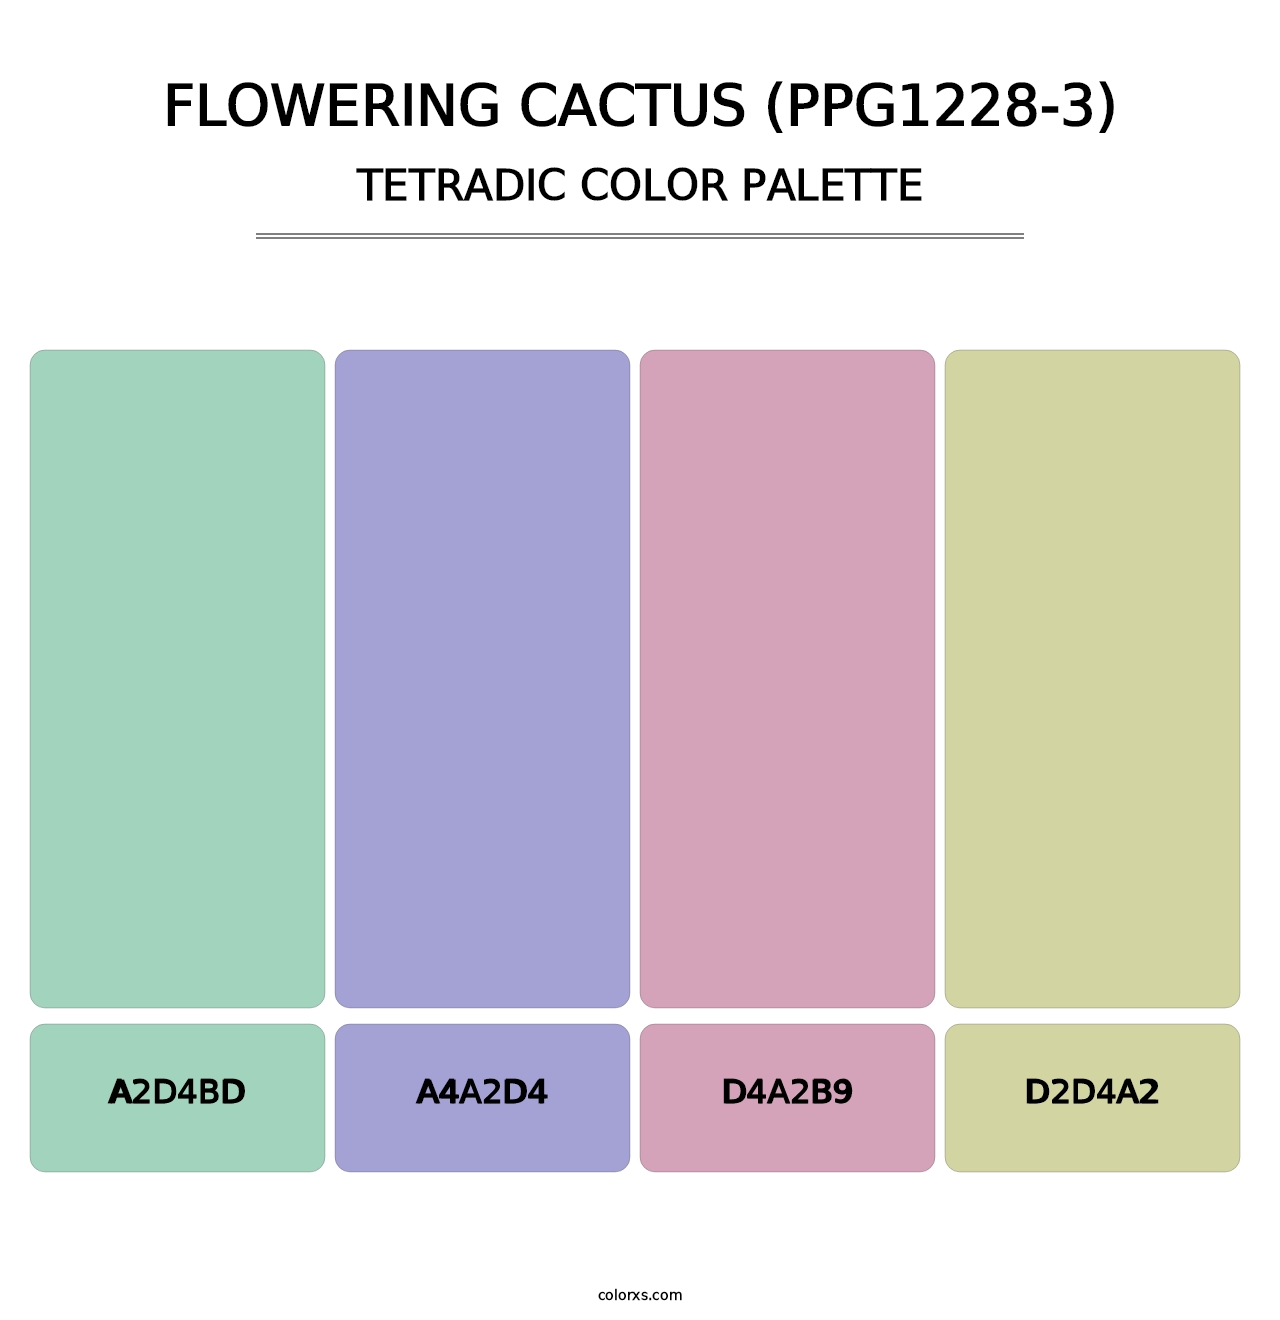 Flowering Cactus (PPG1228-3) - Tetradic Color Palette